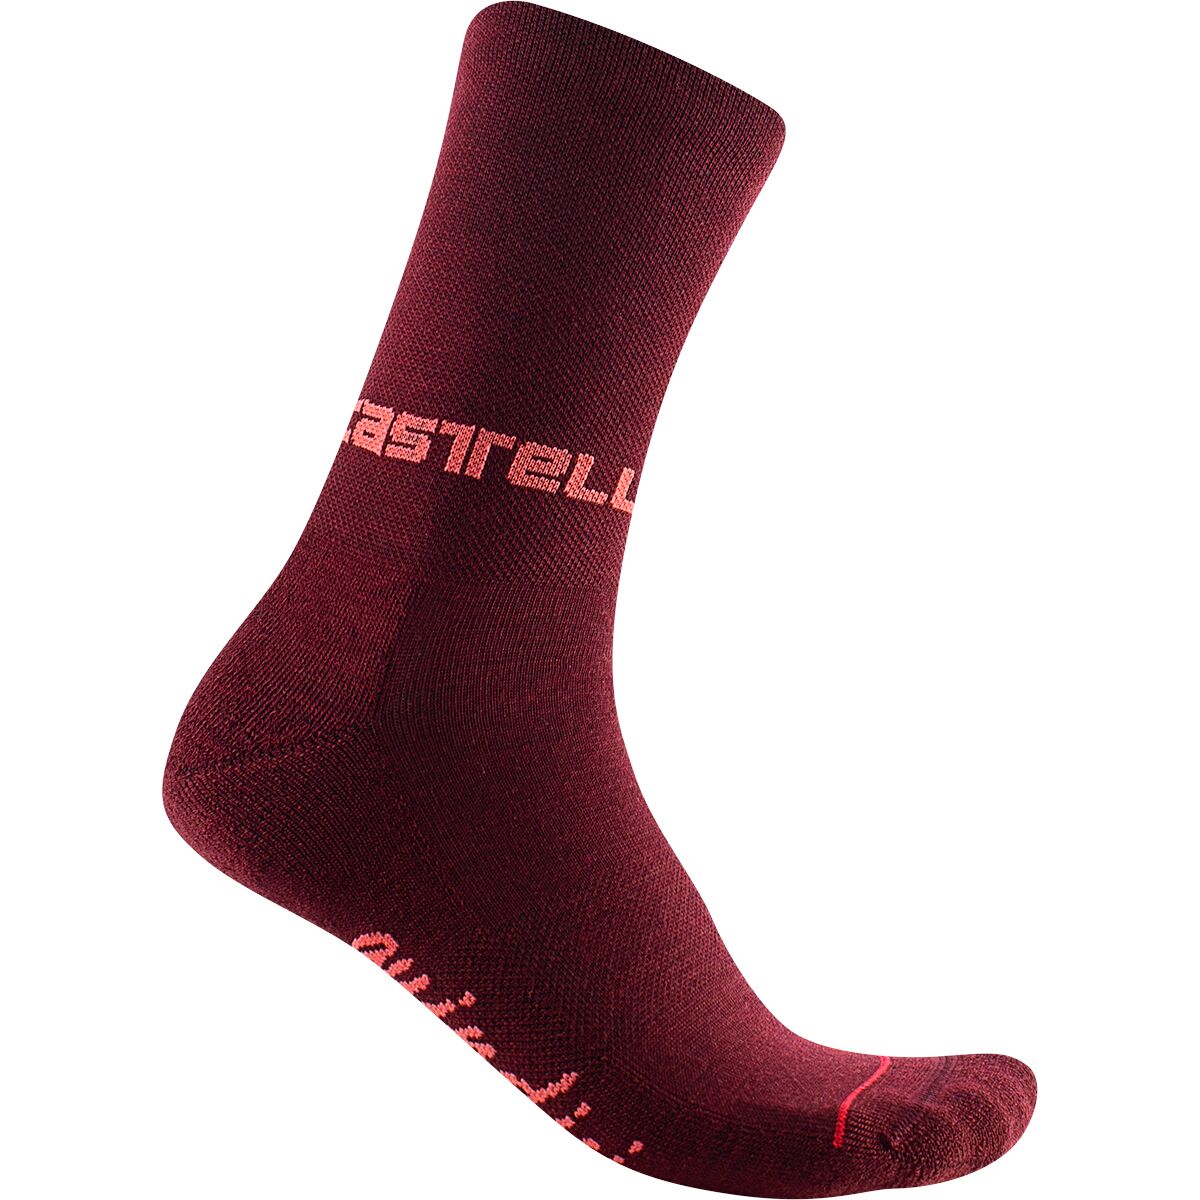 Castelli Quindici Soft Merino Sock - Women's